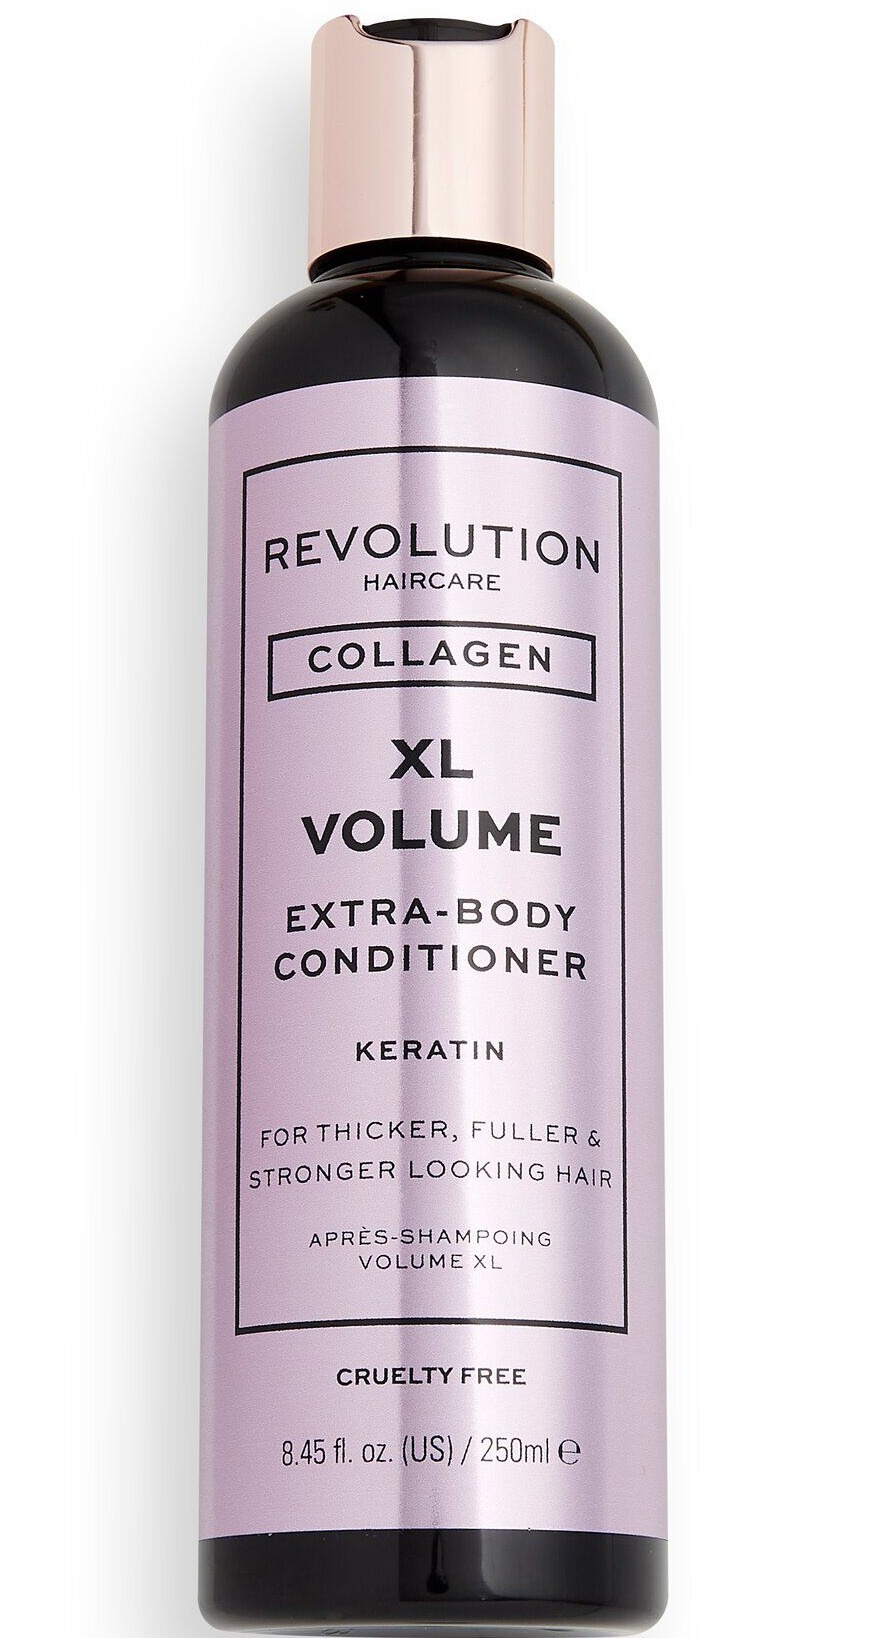 Revolution Haircare Collagen XL Volume Extra-Body Conditioner